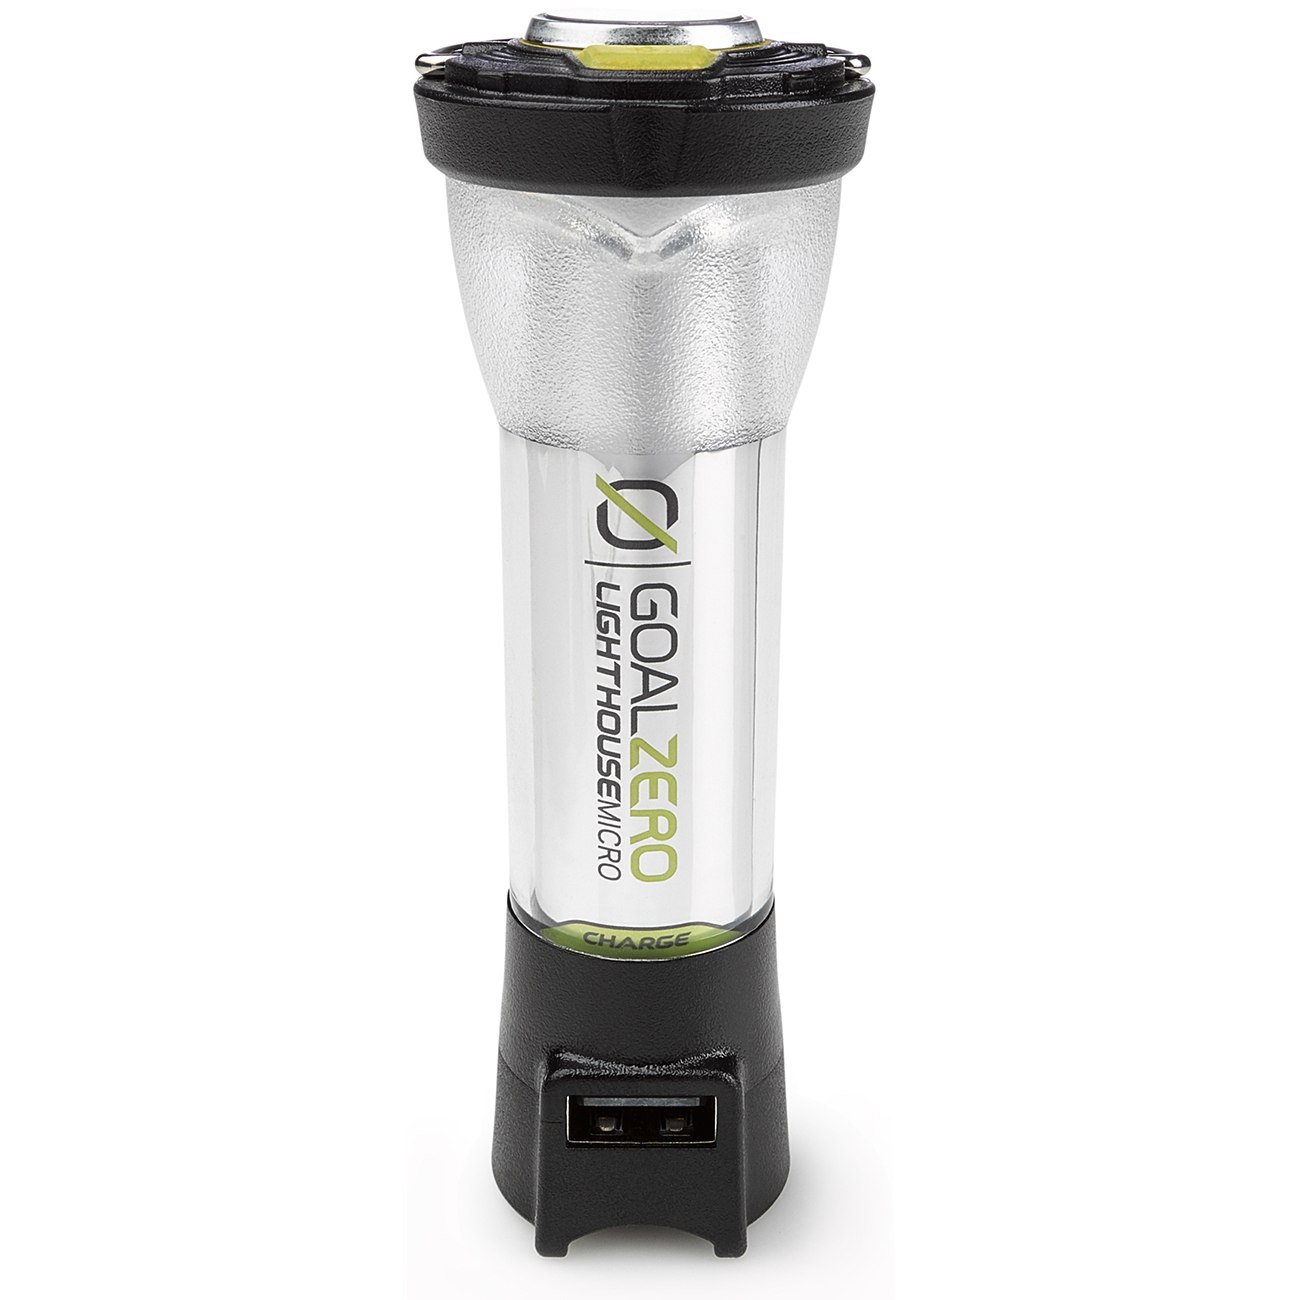 Productfoto van Goal Zero Lighthouse Micro Charge USB Rechargeable Lantaarn LED